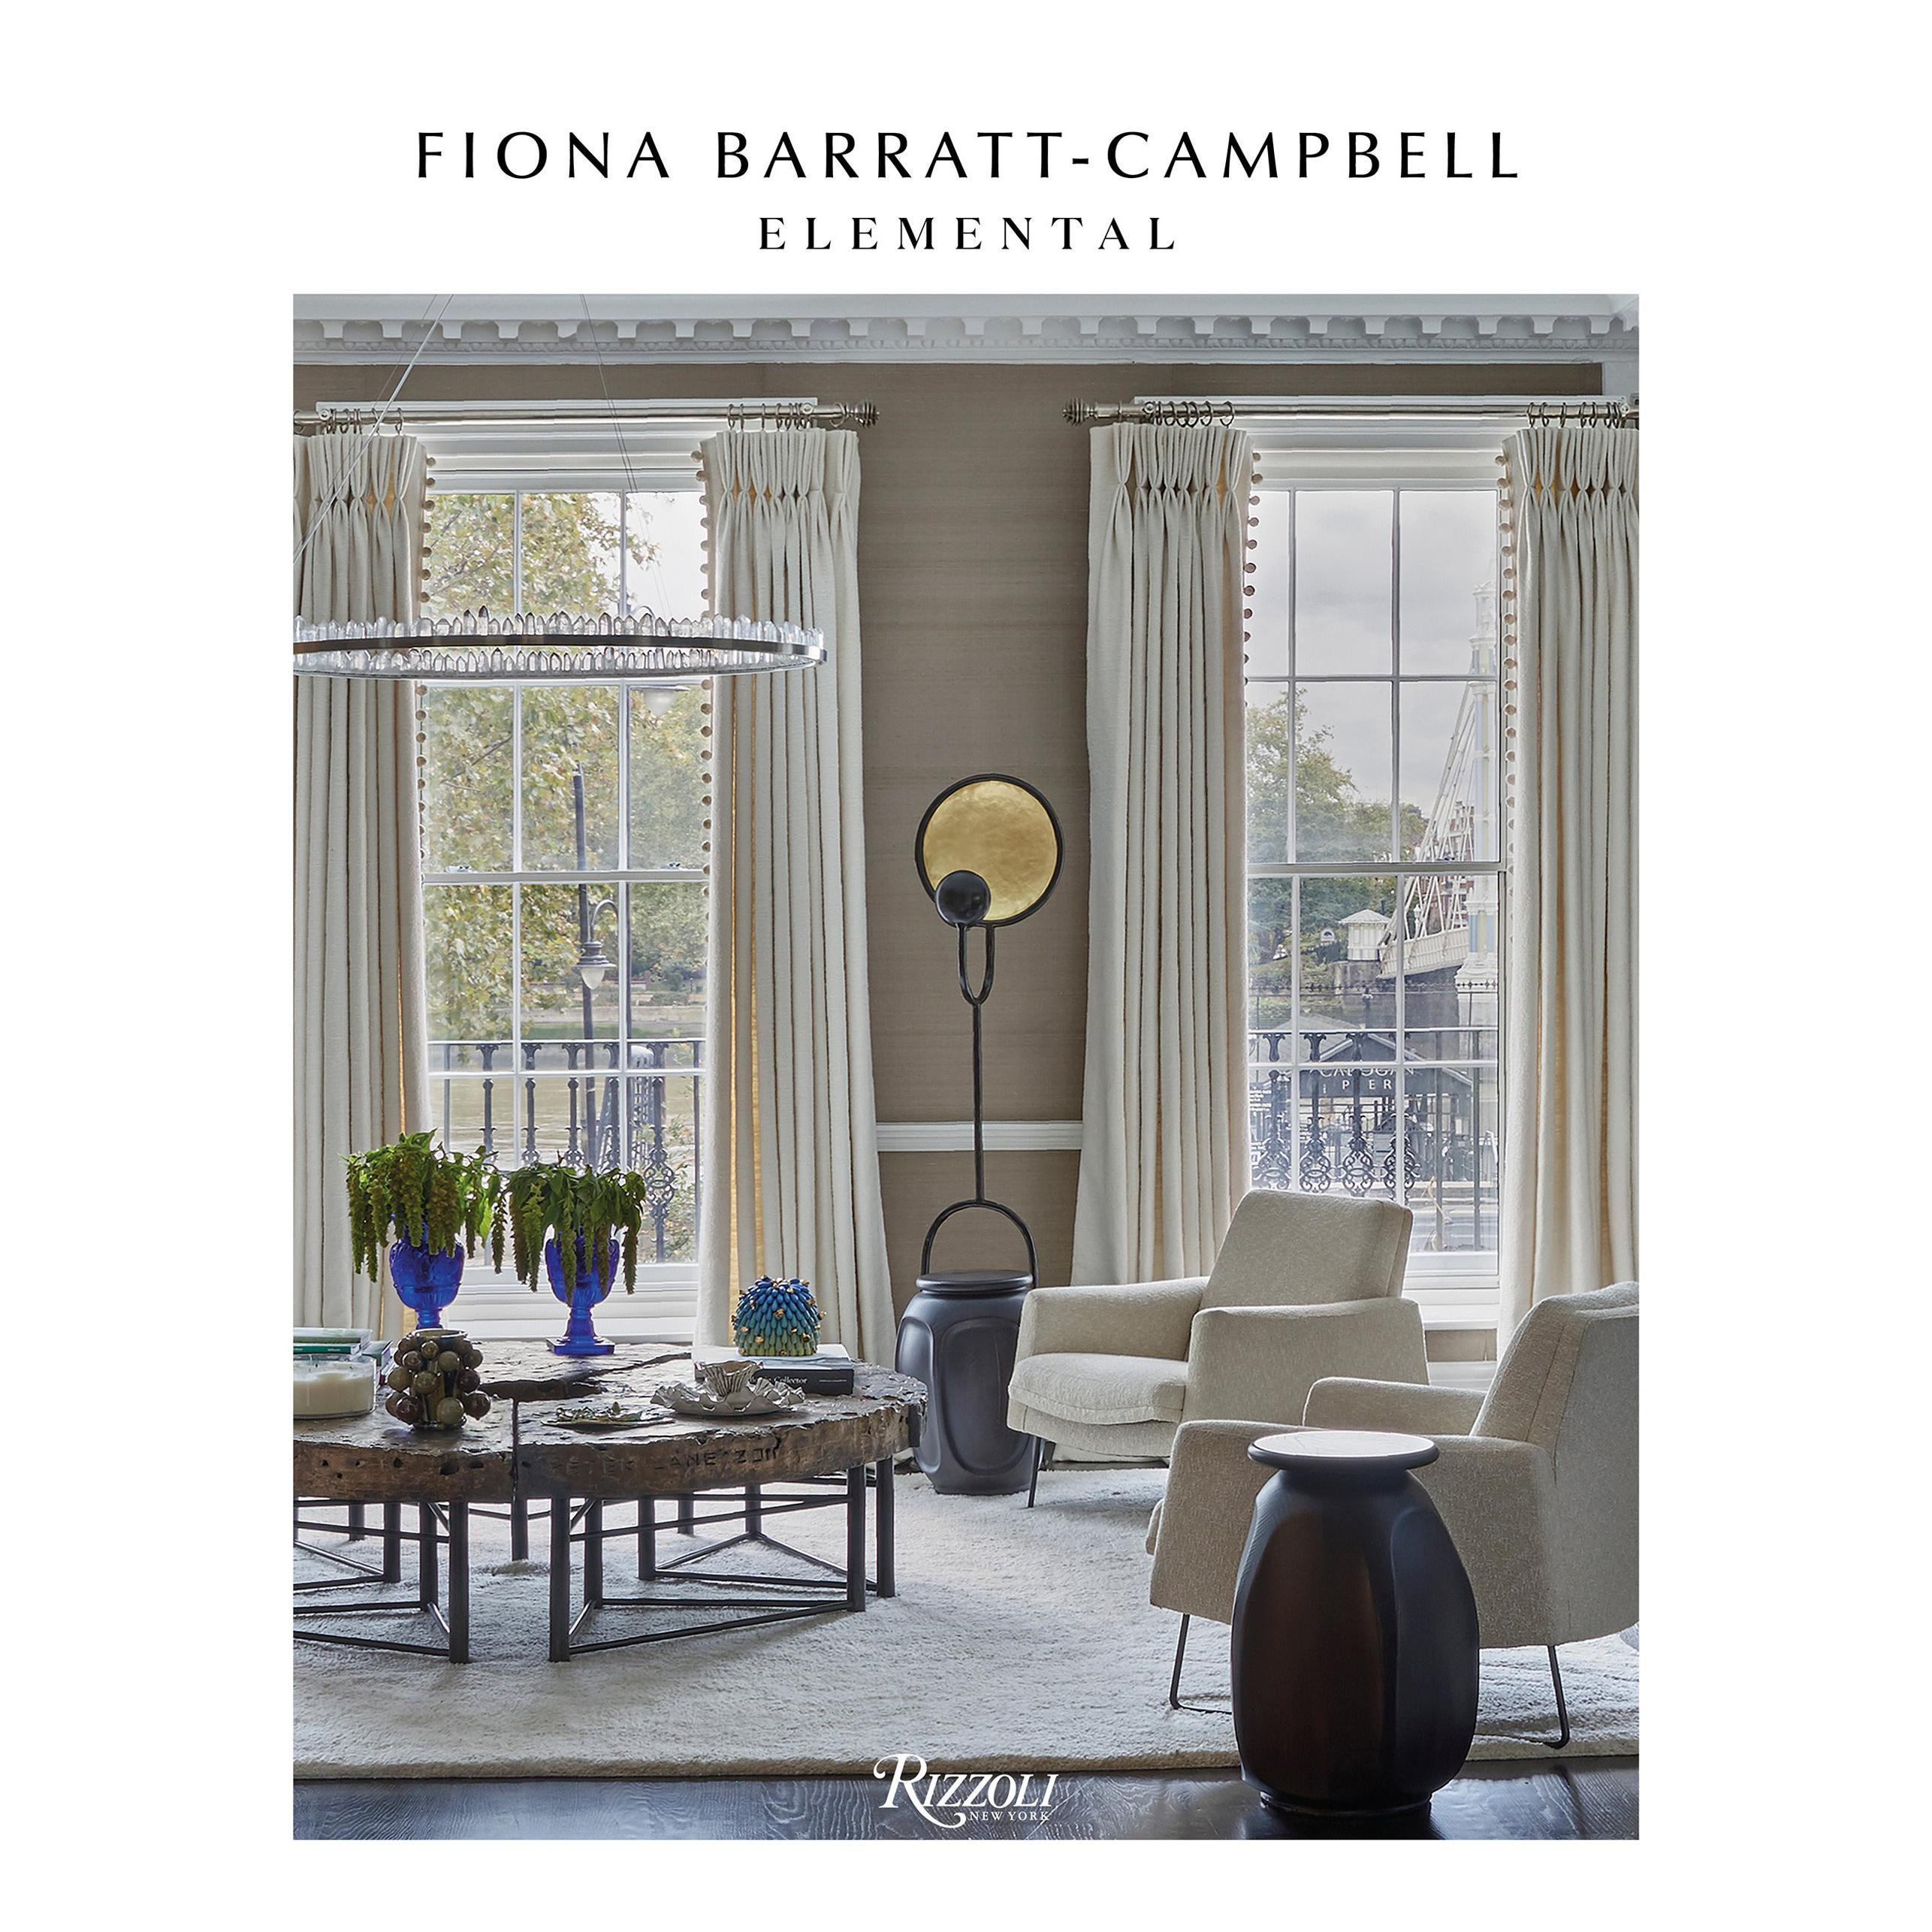 Fiona Barratt-Campbell Elemental